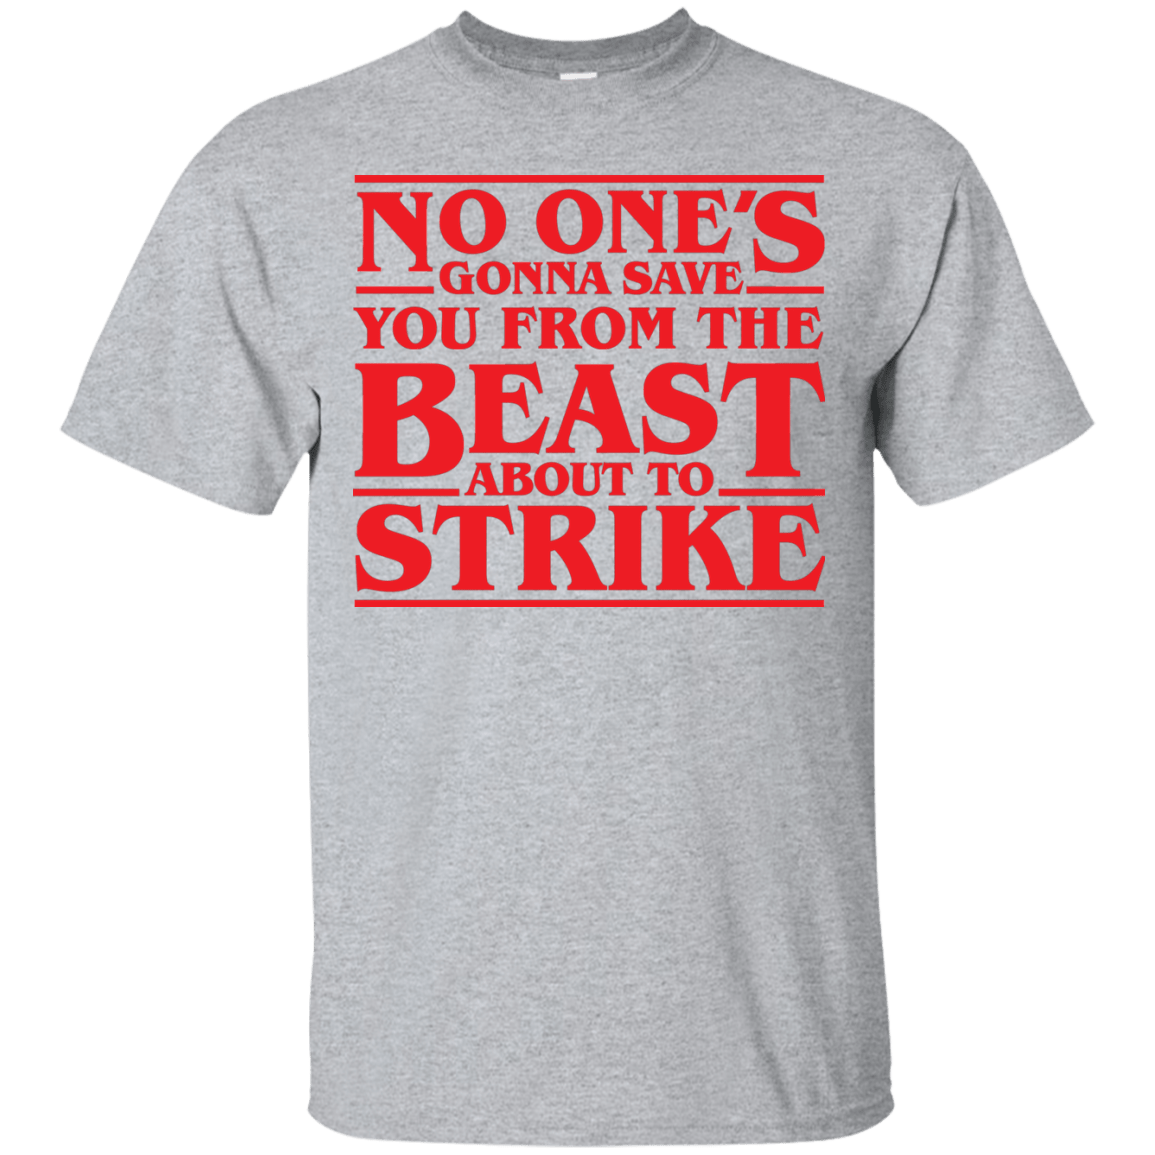 T-Shirts Sport Grey / Small The Beast T-Shirt